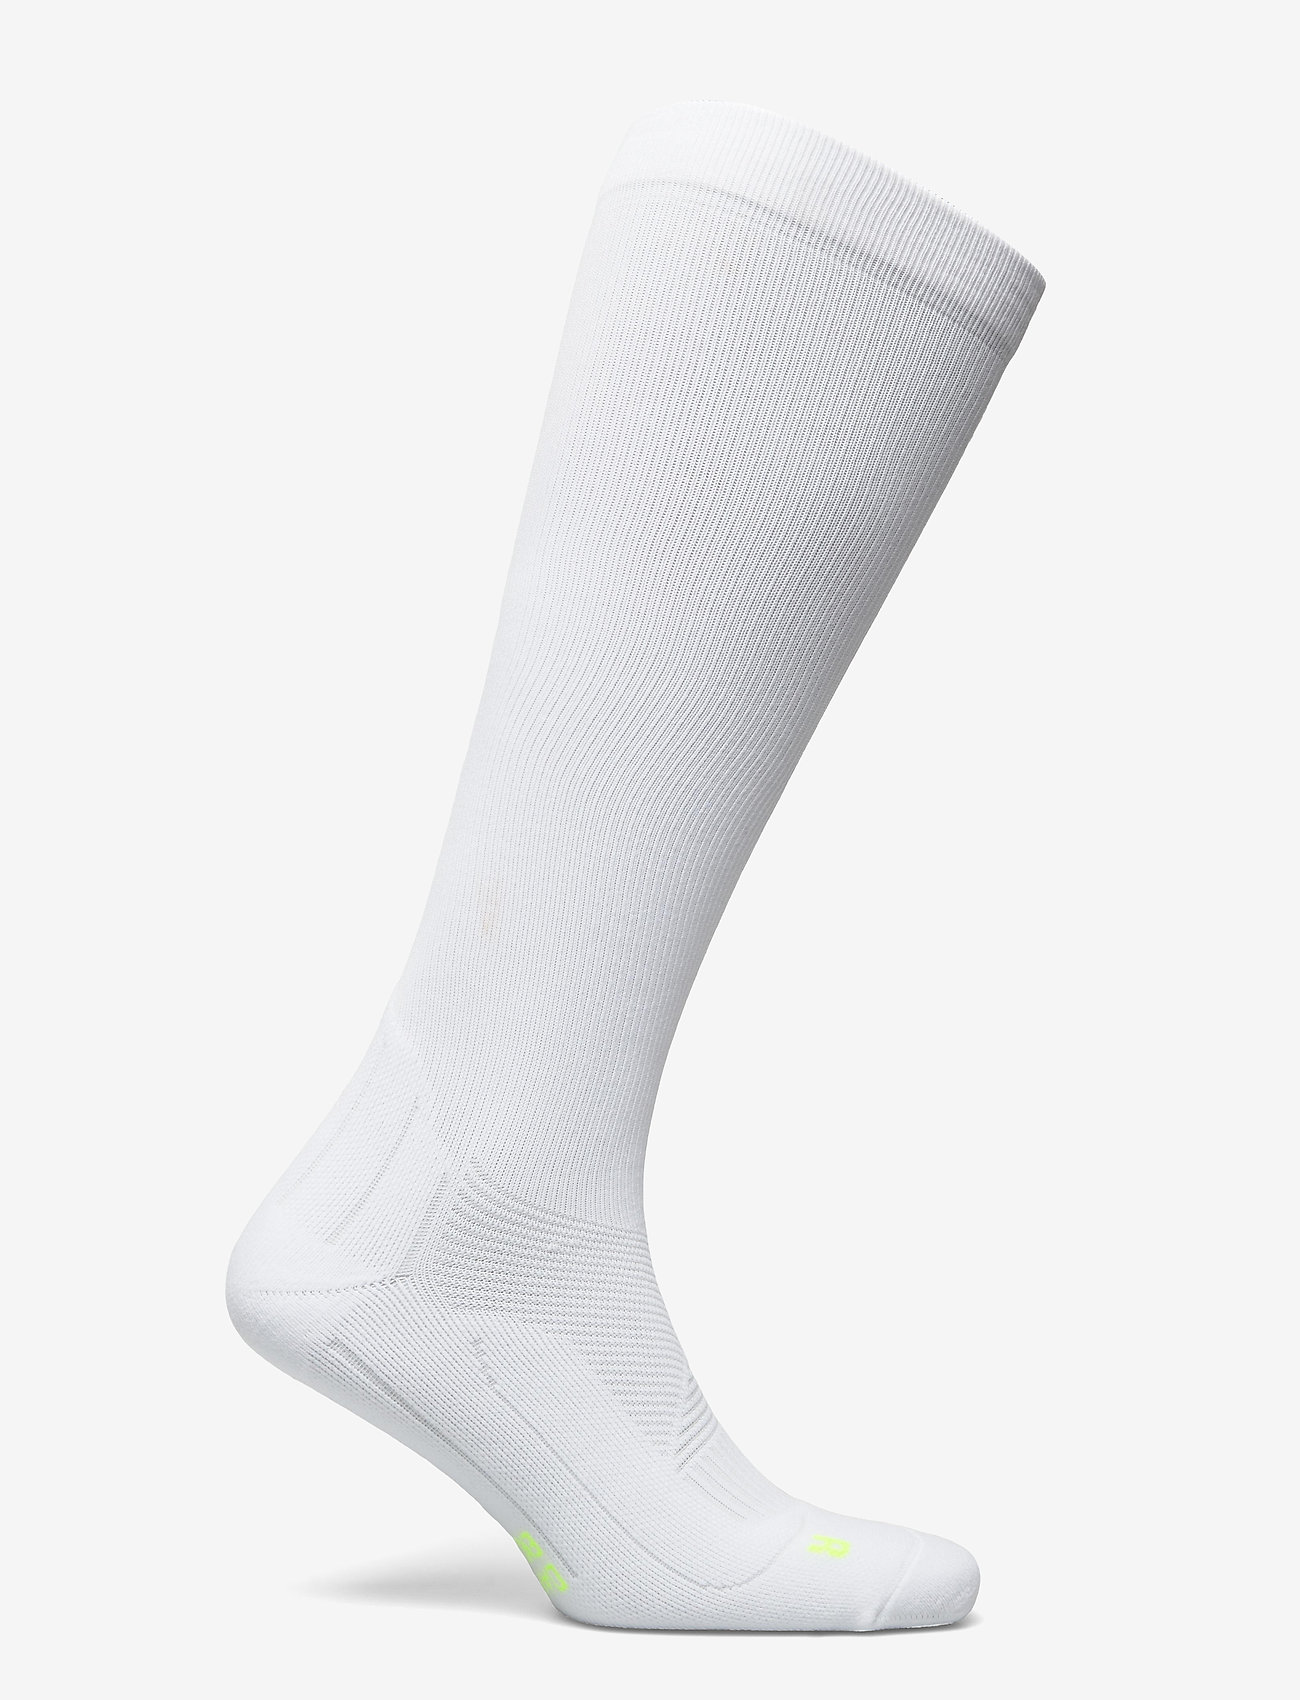 Danish Endurance - Compression Socks (DECS) 1-pack - laveste priser - white - 1